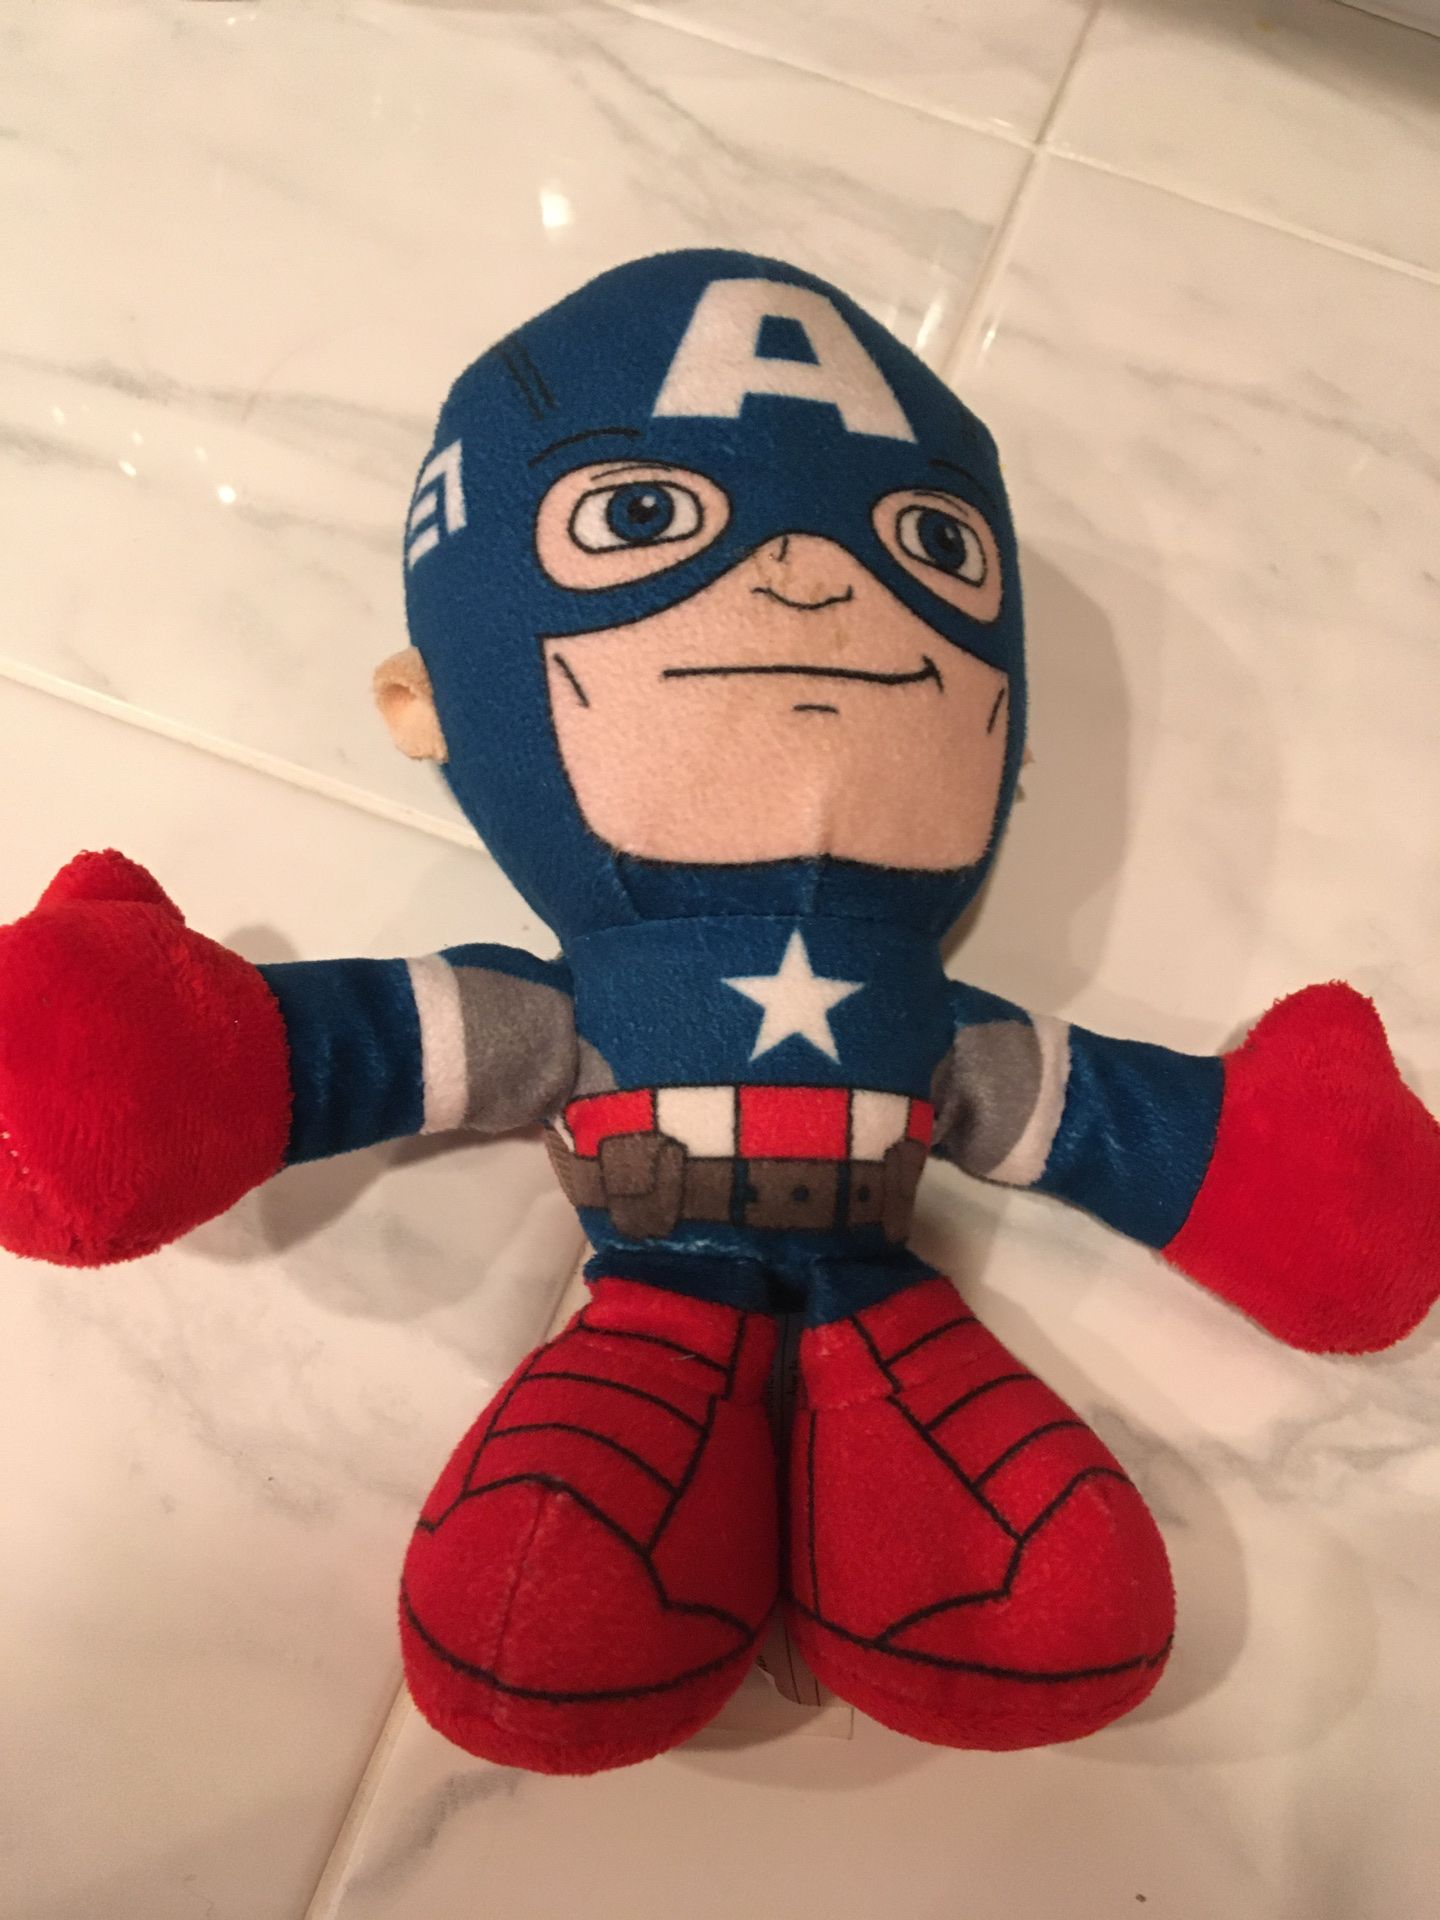 8” Captain America stuffed animal $4